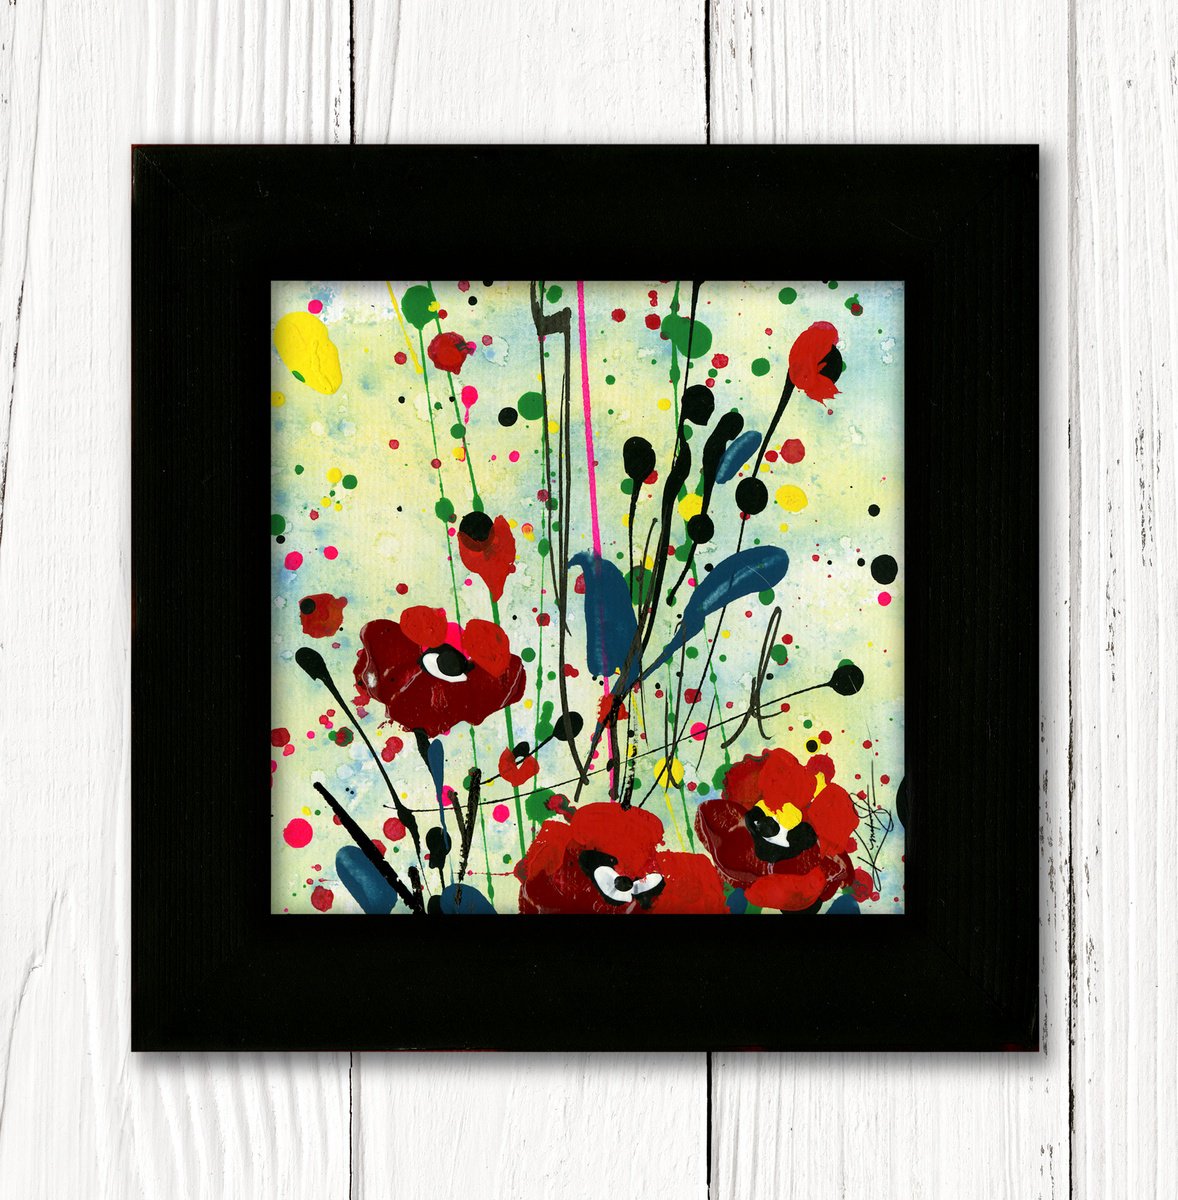 Poppy Dreams 13 - Framed Floral art by Kathy Morton Stanion by Kathy Morton Stanion